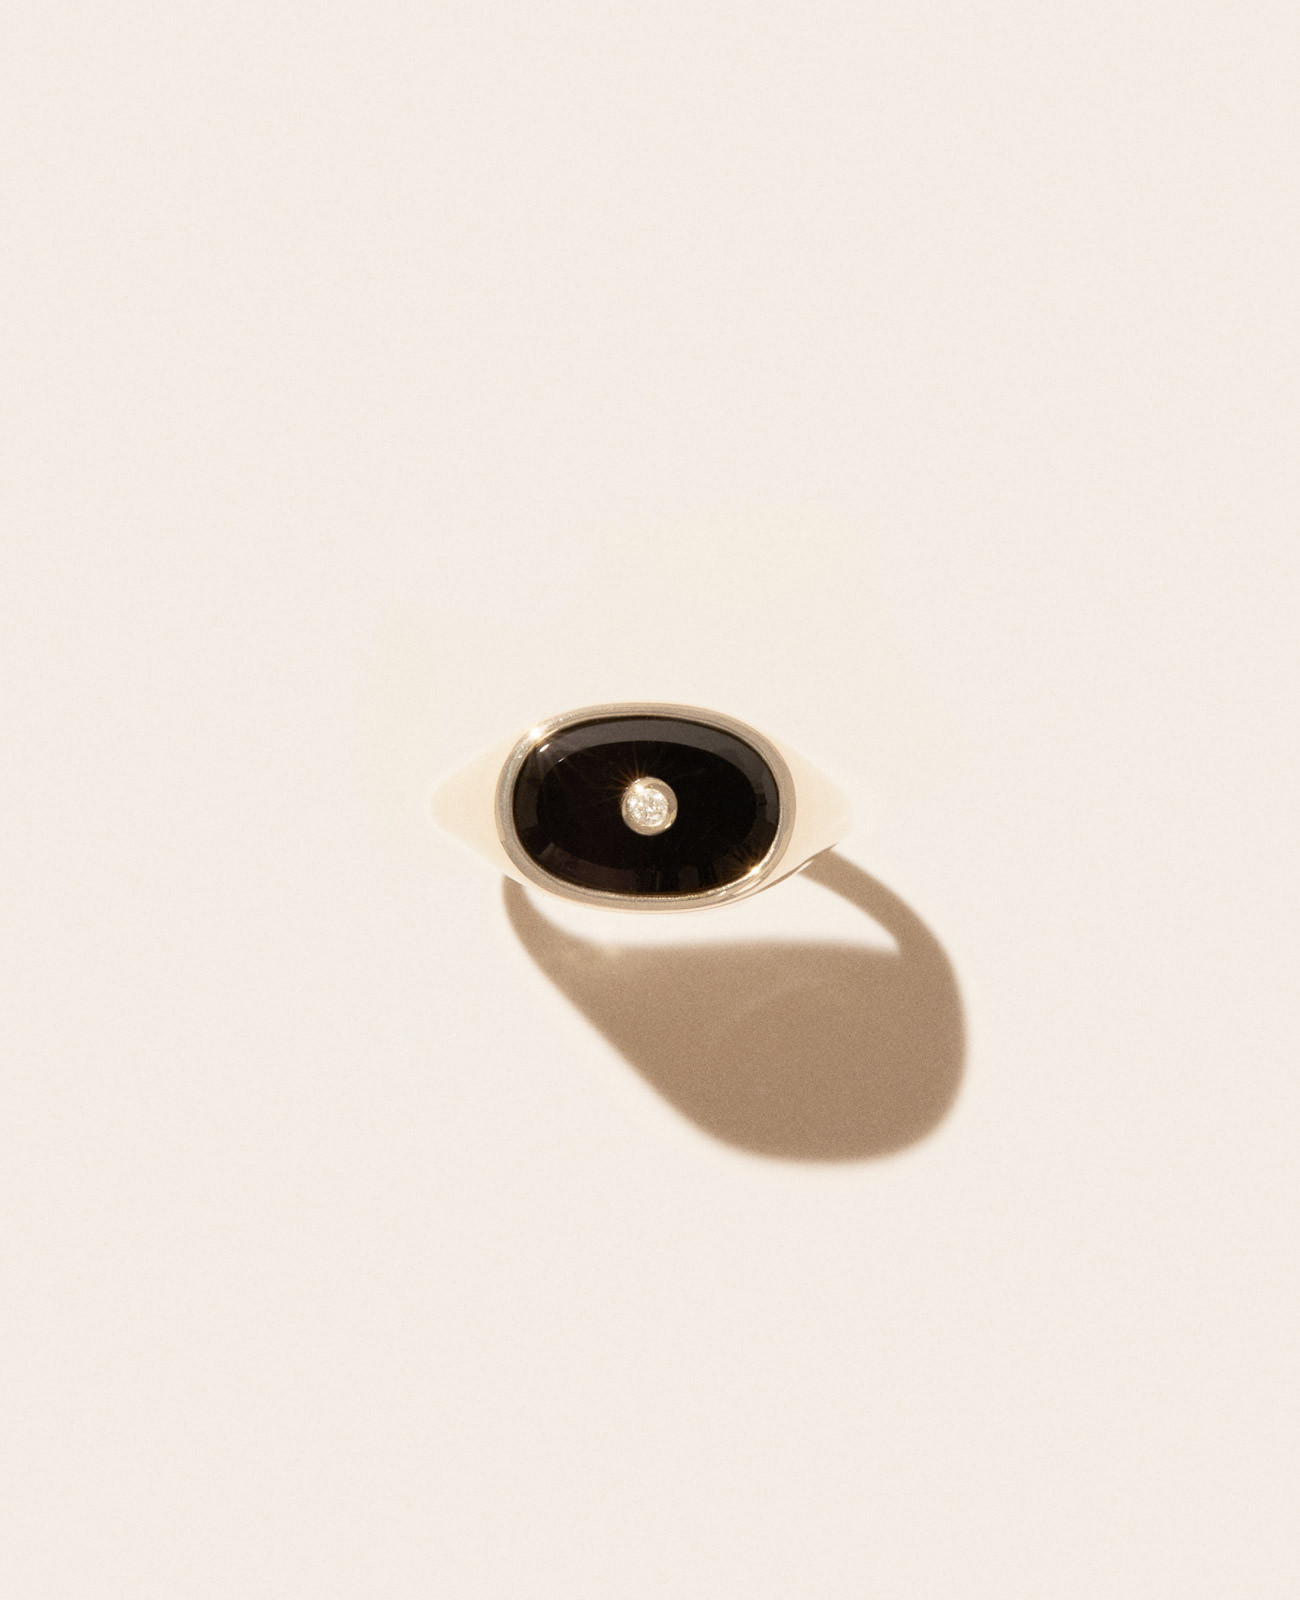 ORSO BLACK ONYX ring pascale monvoisin jewelry paris